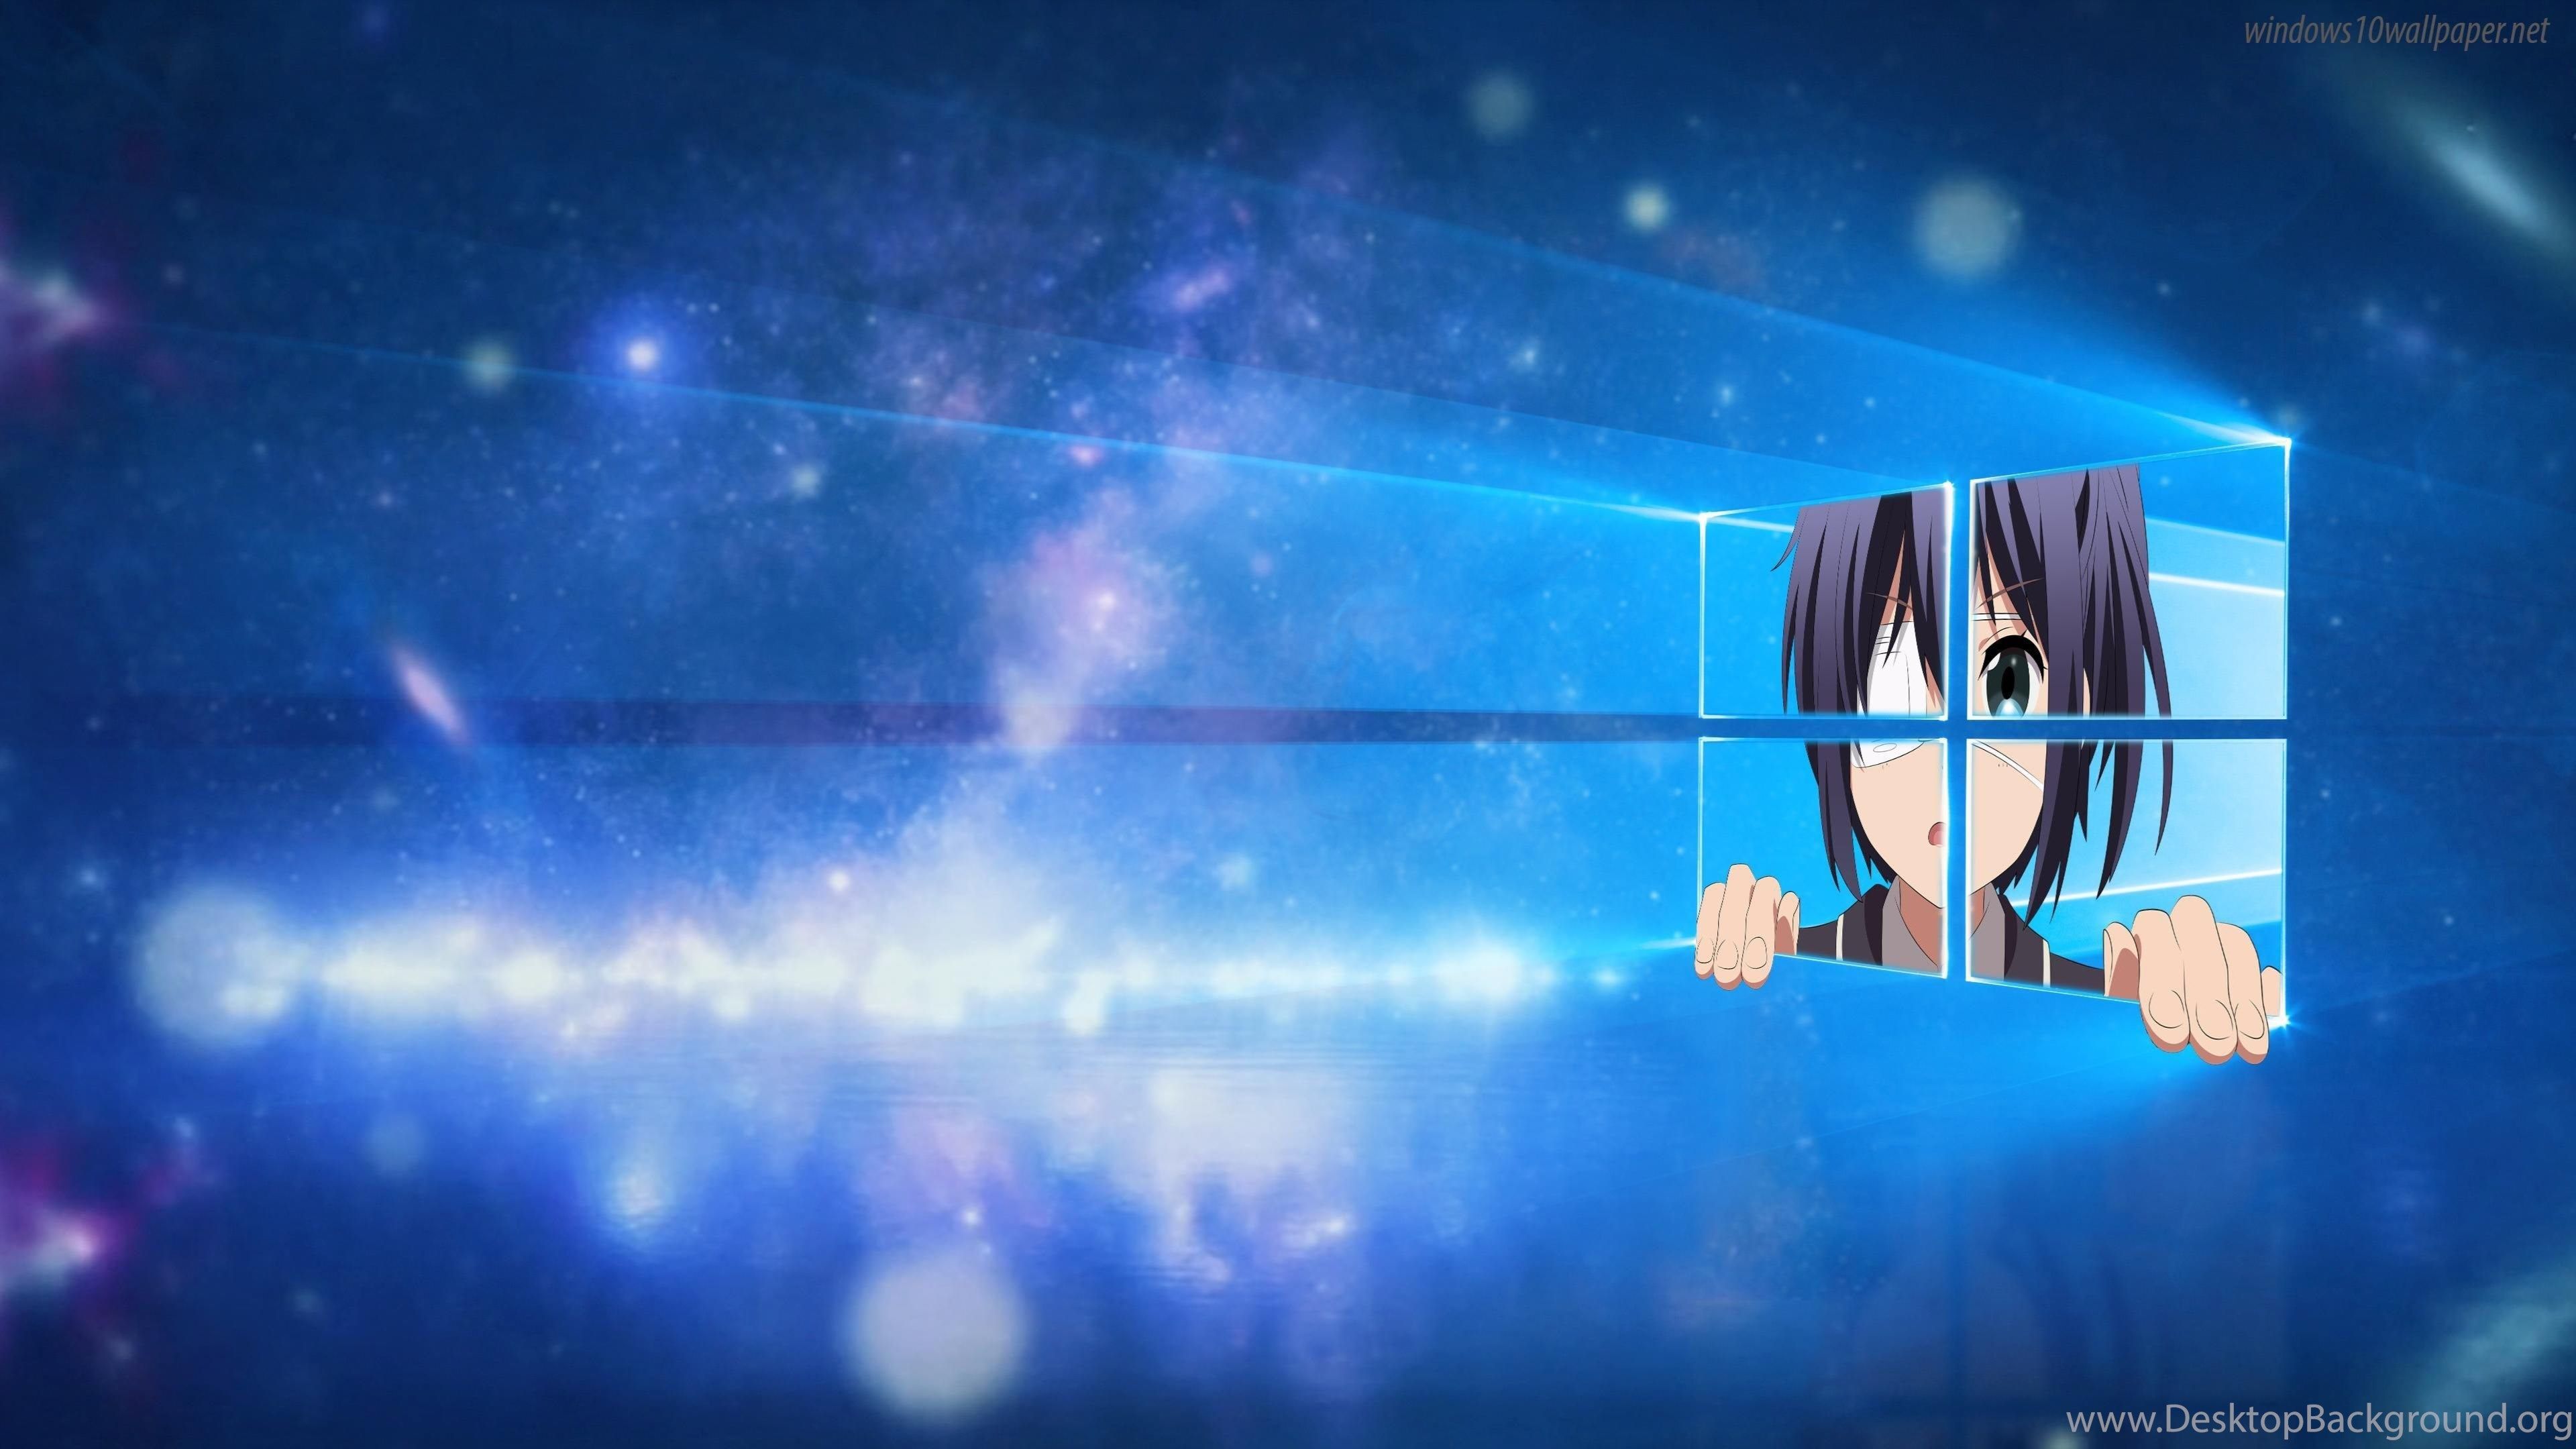 Windows 10 4k Anime Desktop Background